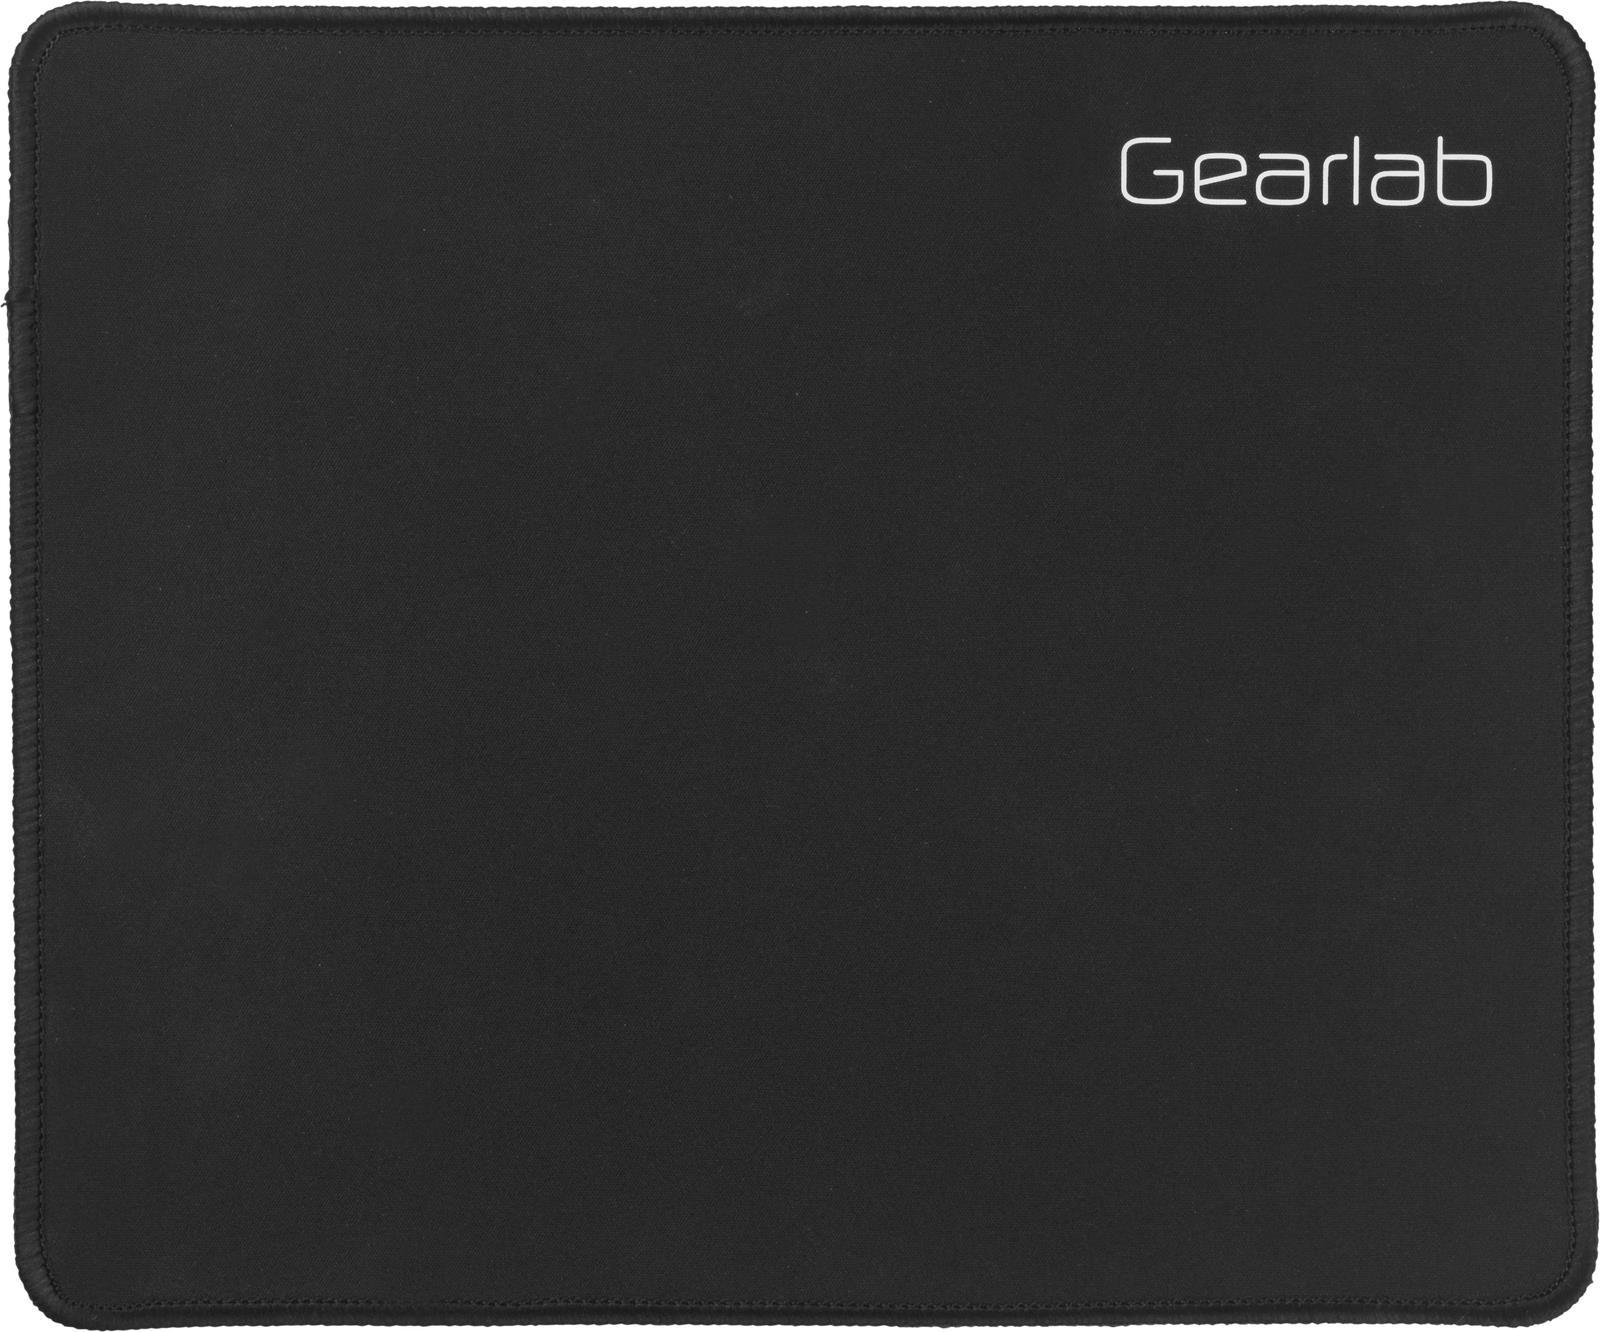 Gearlab GLB215000 Mauspad Schwarz (MOUSE PAD)